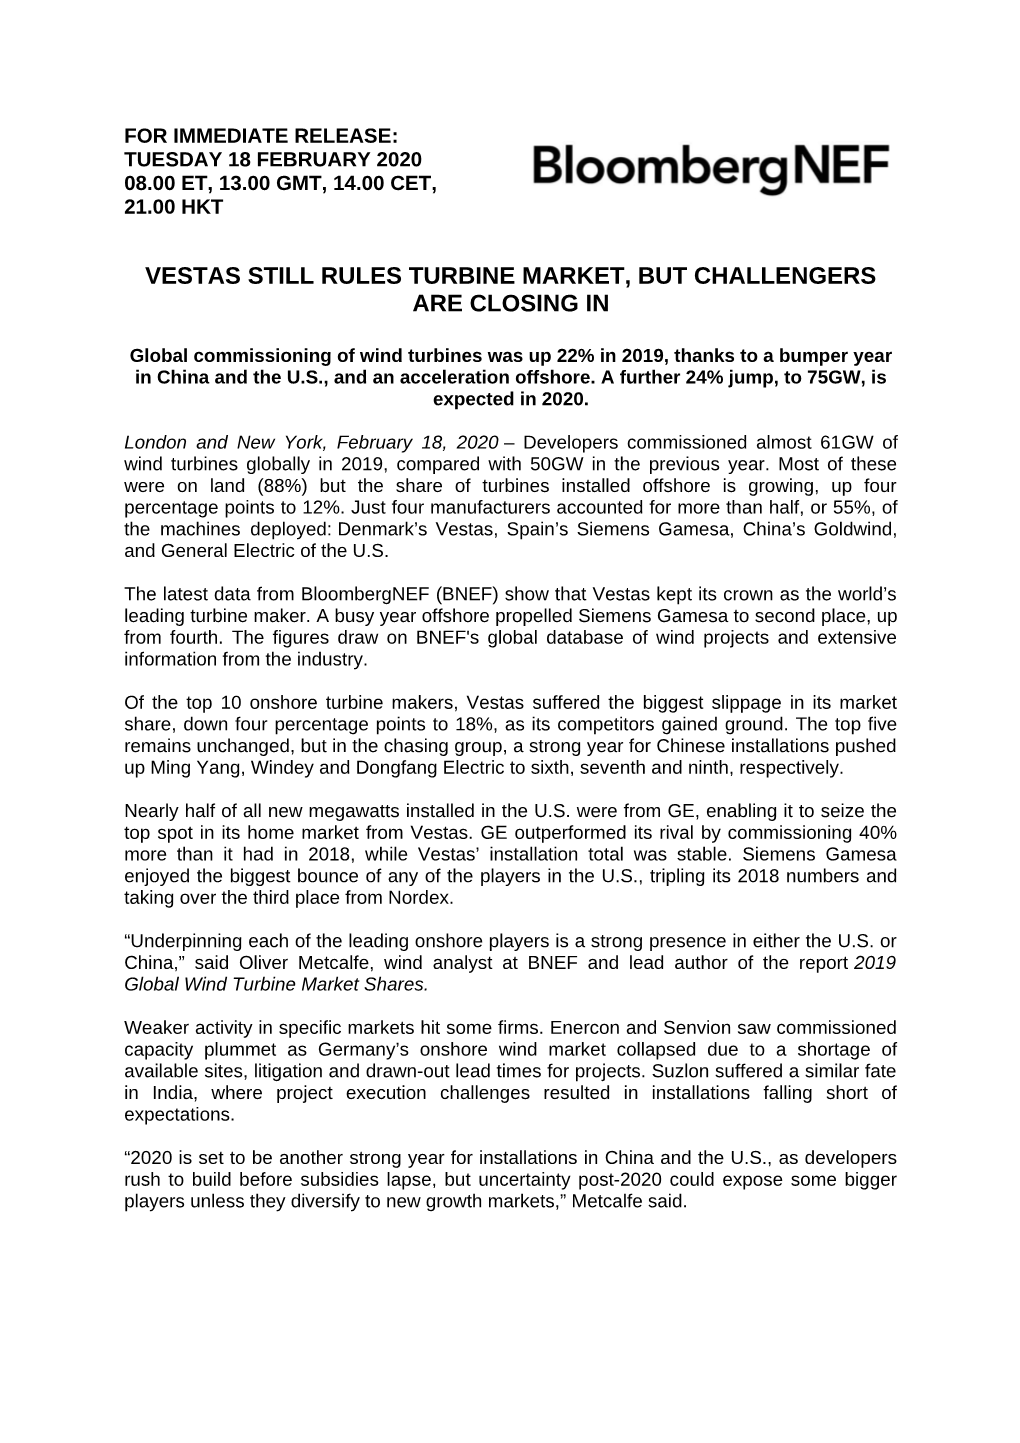 Vestas Still Rules Turbine Market, but Challengers Are Closing In